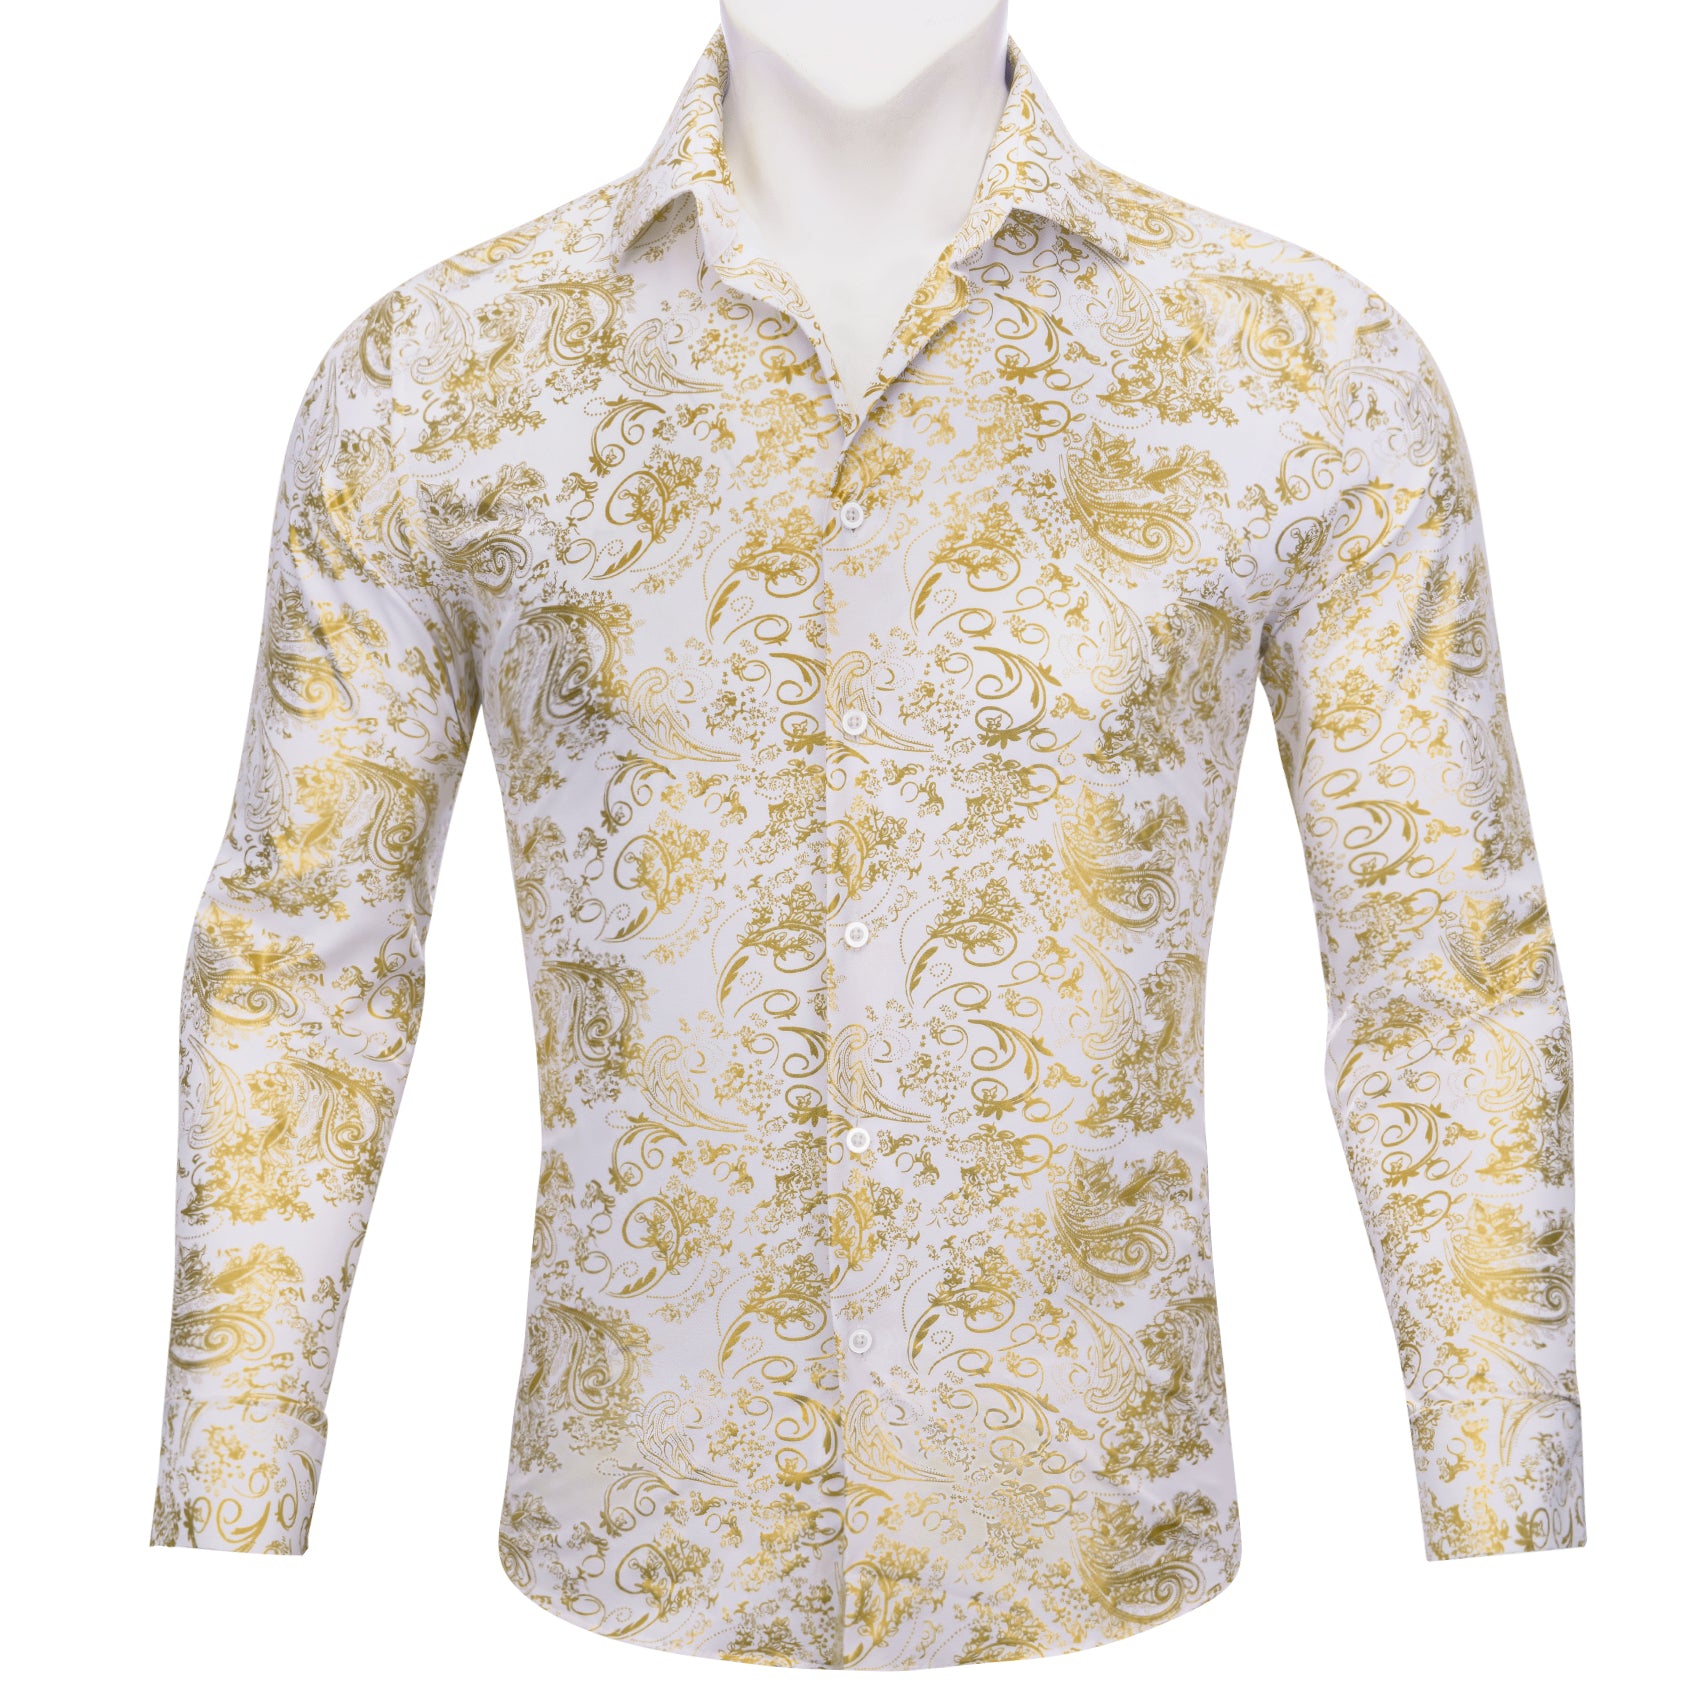 Barry.wang White Gold Paisley Silk Men's Shirt